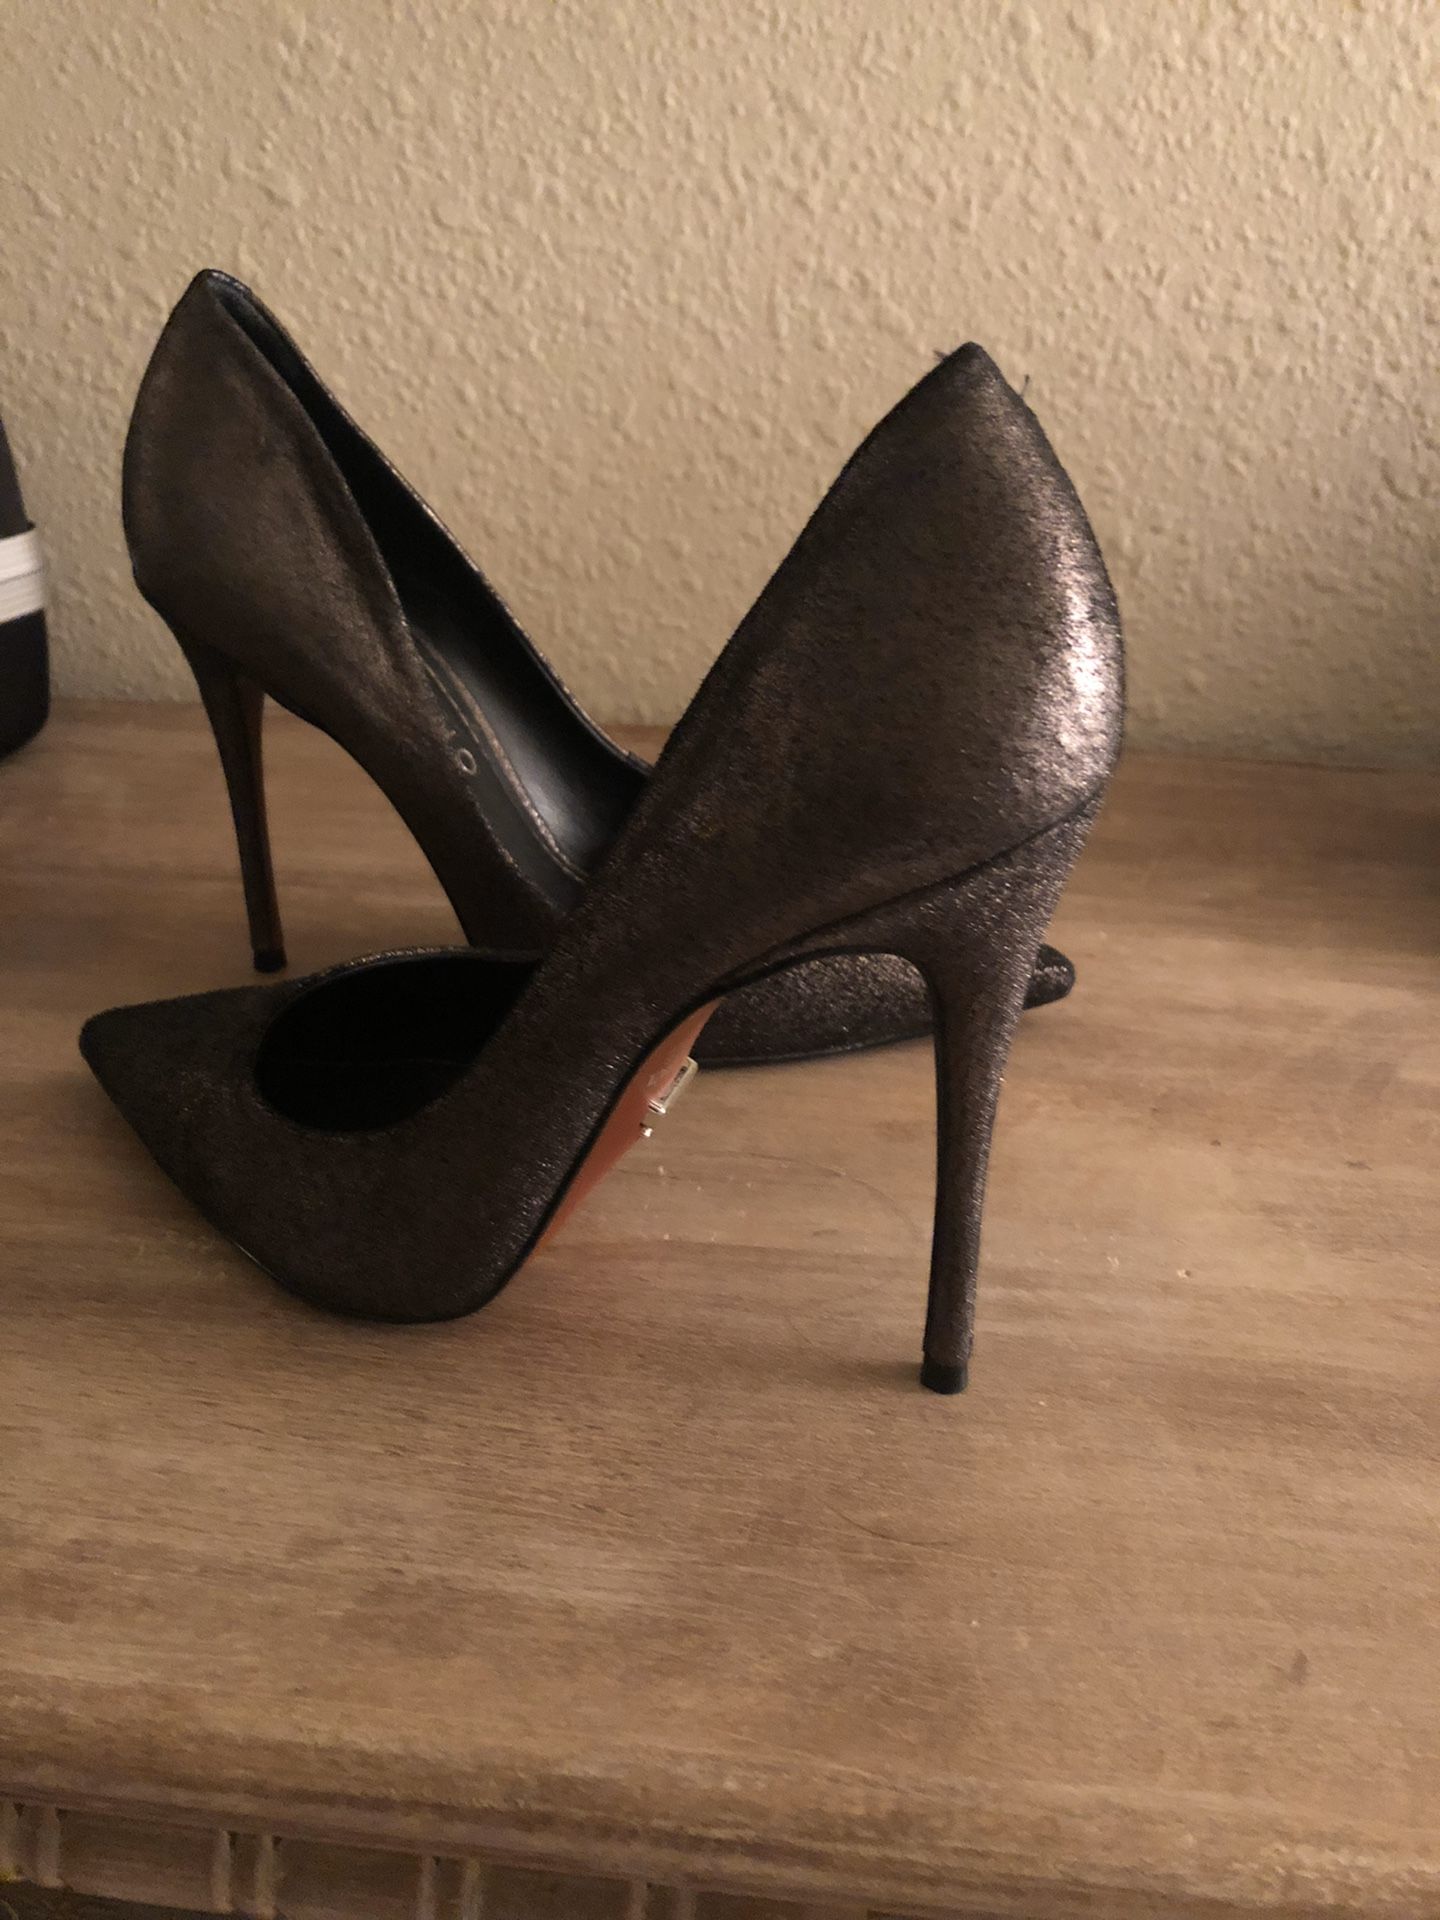 Corano Brazil leather high heels size 8